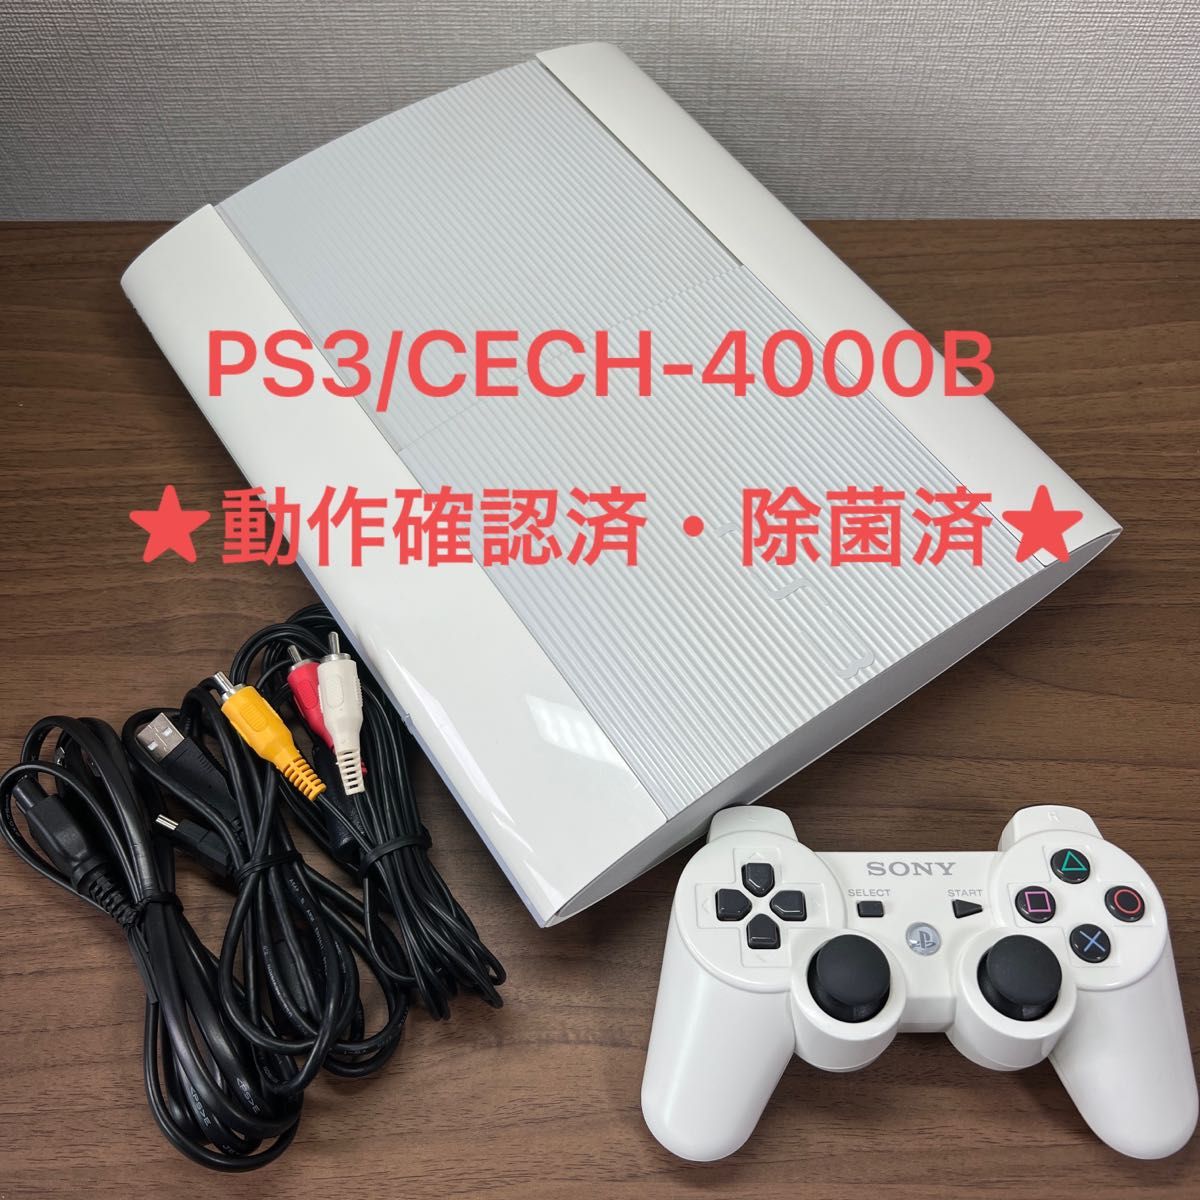 SONY PlayStation3 CECH-4000BLW 250GB クラシックホワイト｜PayPayフリマ